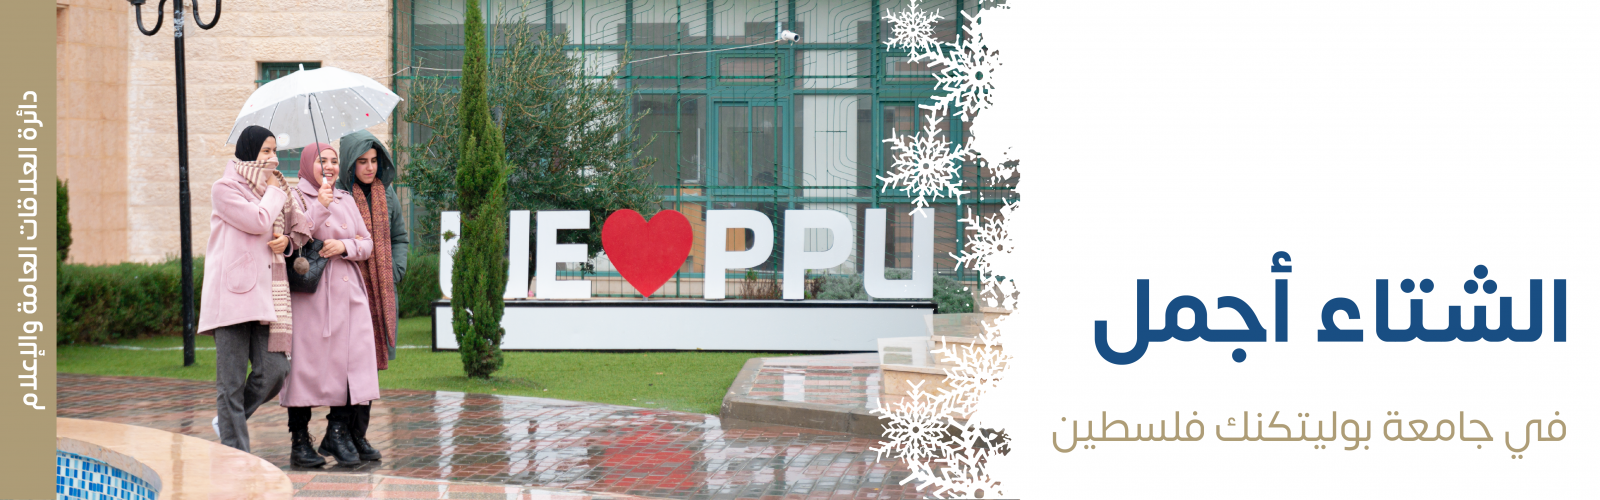 Palestine Polytechnic University (PPU) - الشتاء أجمل في جامعة بوليتكنك فلسطين